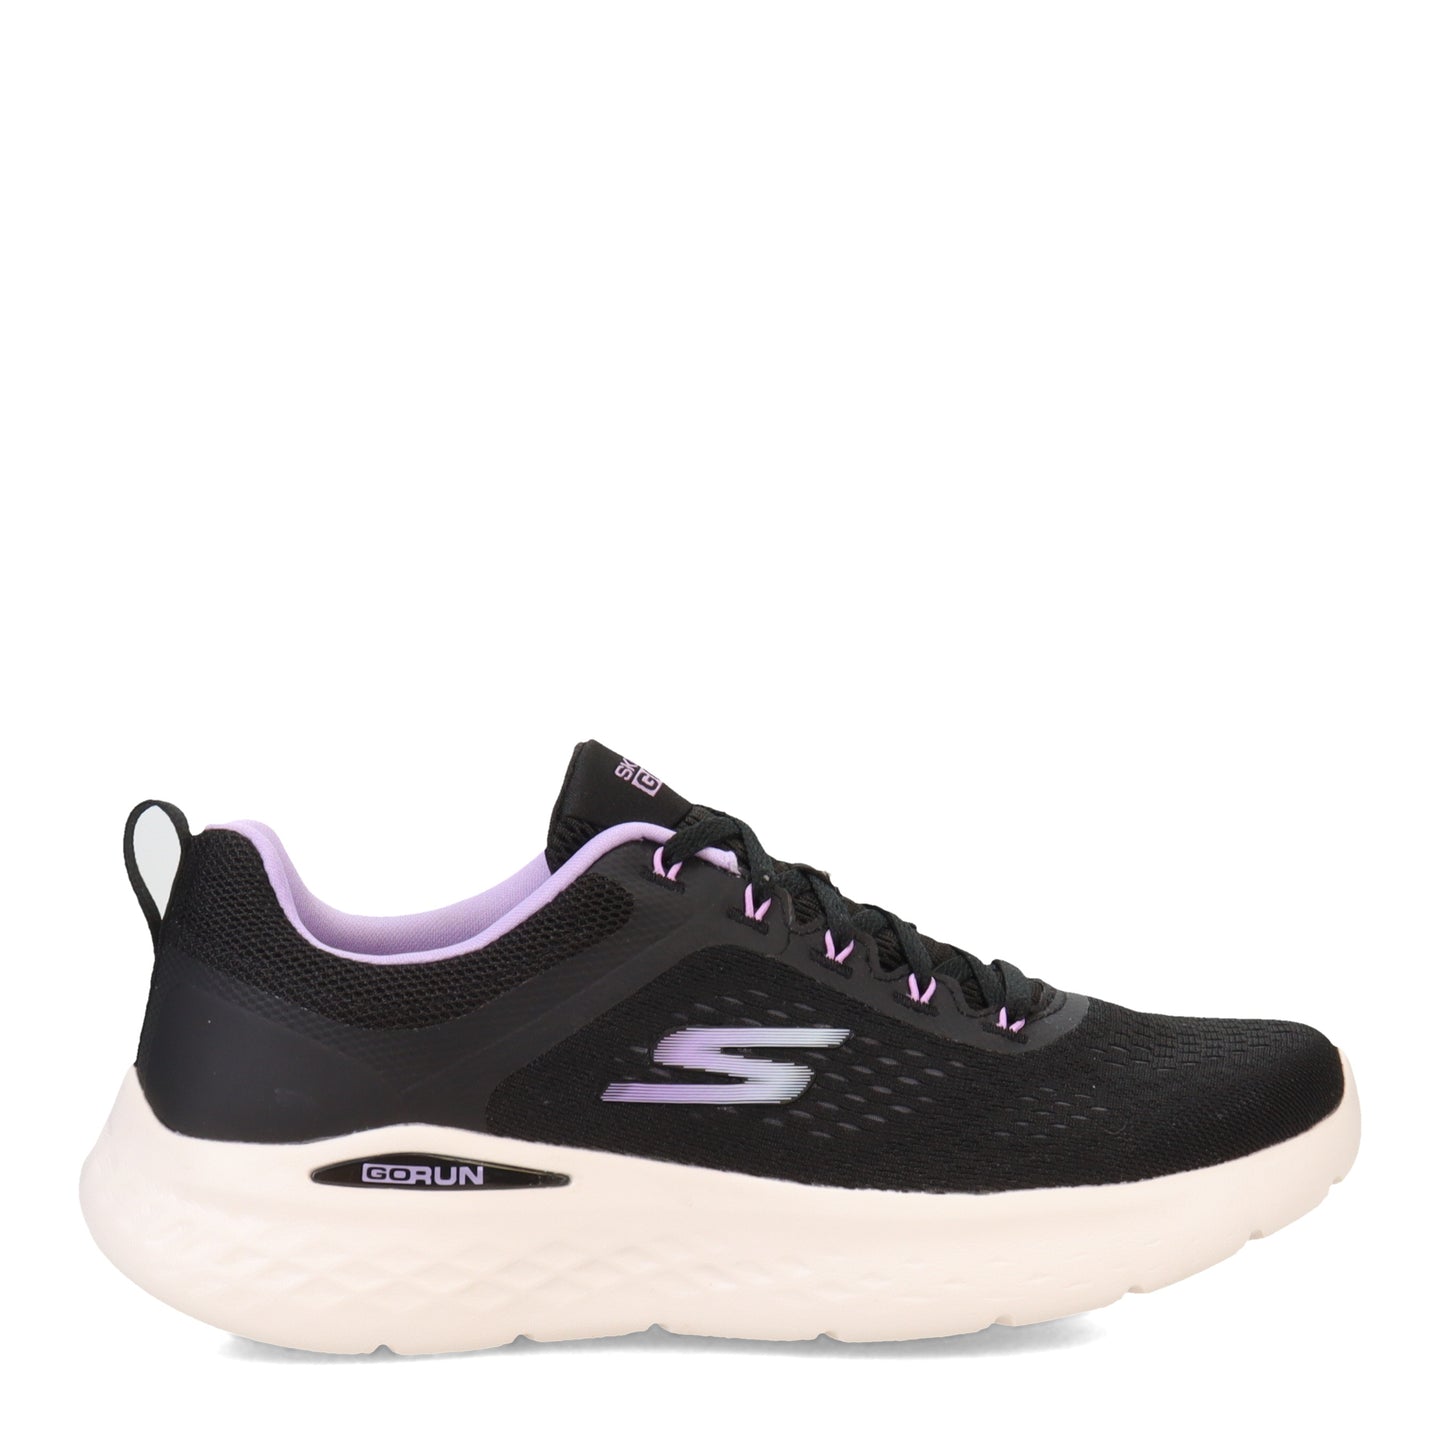 Peltz Shoes  Women's Skechers GO RUN Lite Running Shoe BLACK WHITE PURPLE 129423-BKPR